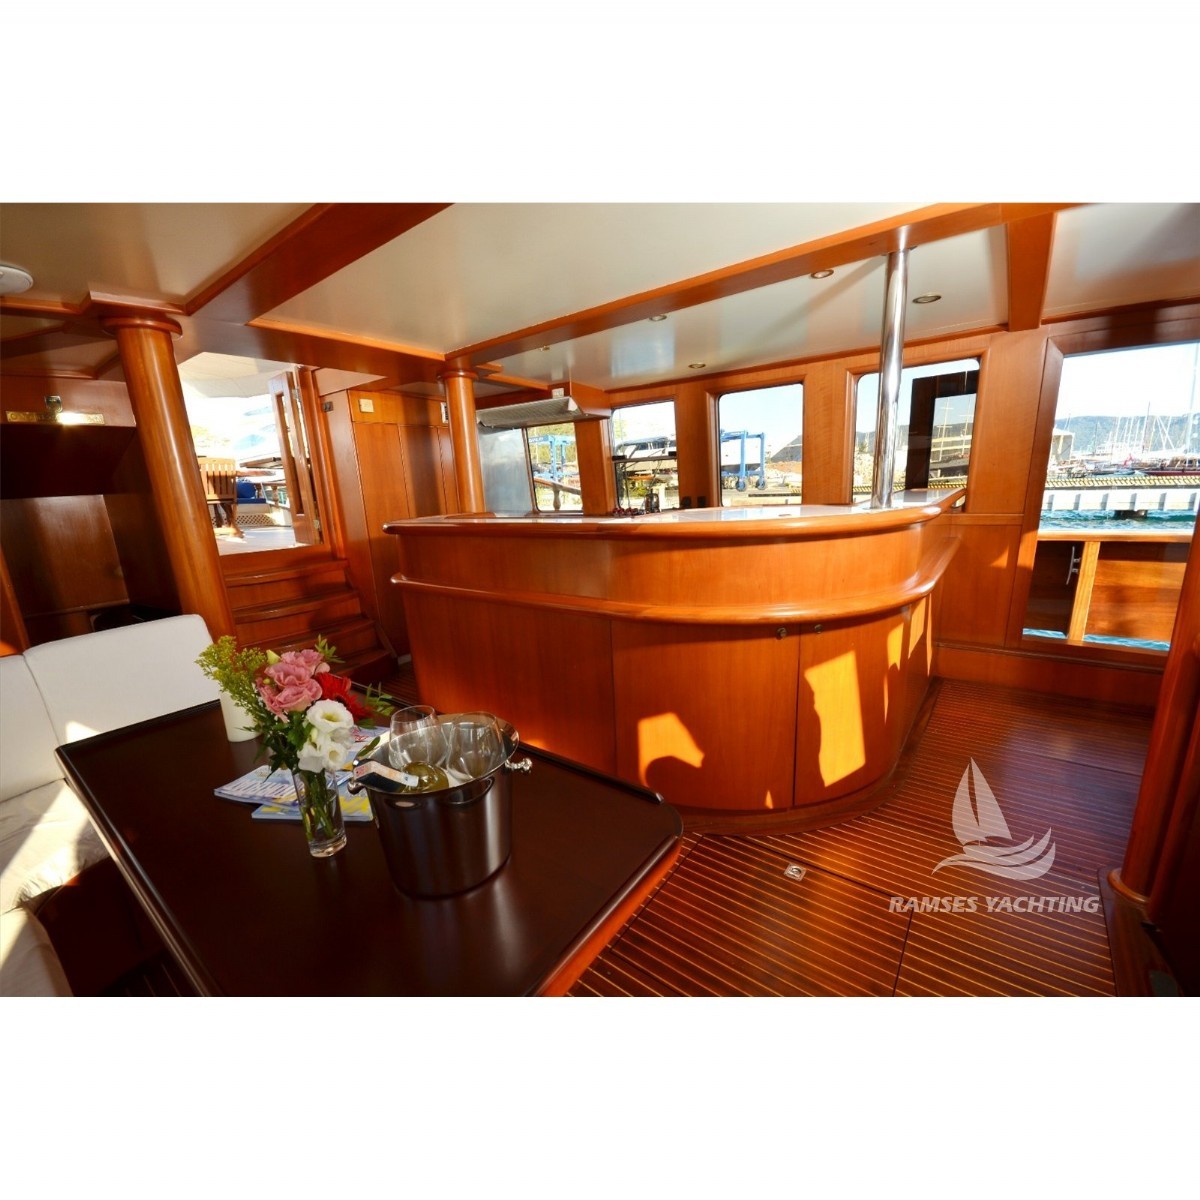 Luxury Boats | L660 - Yacht Charter Turkey 12 person Luxury Gulet | L660  | Yacht charter Turkey,Gulet charter, YachtingTurkey, gulet Turkey, cabin charter , yachtrentalsTurkey, boat charter Turkey, Bodrum yacht charter,  | 